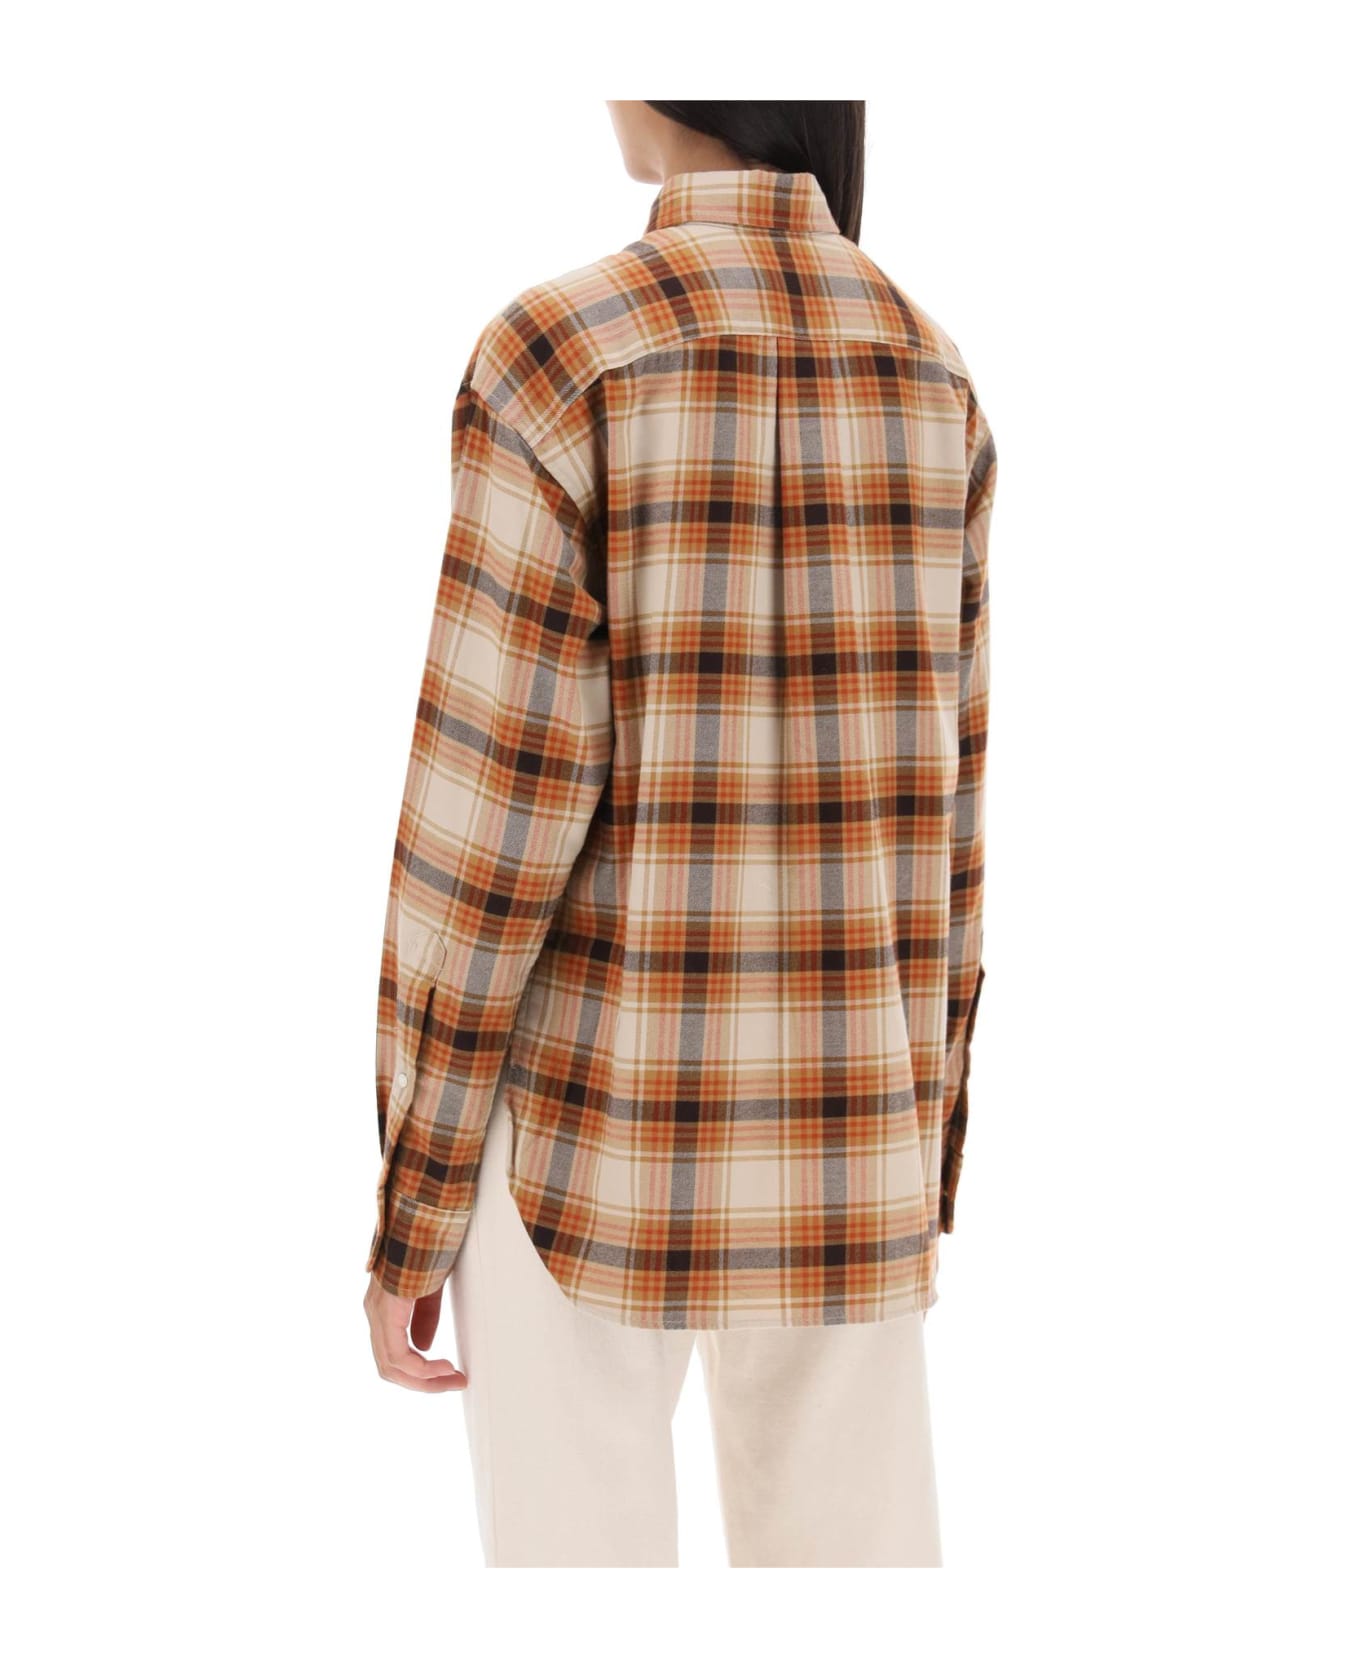 Polo Ralph Lauren Check Flannel Shirt - TAN MULTI PLAID (Beige)